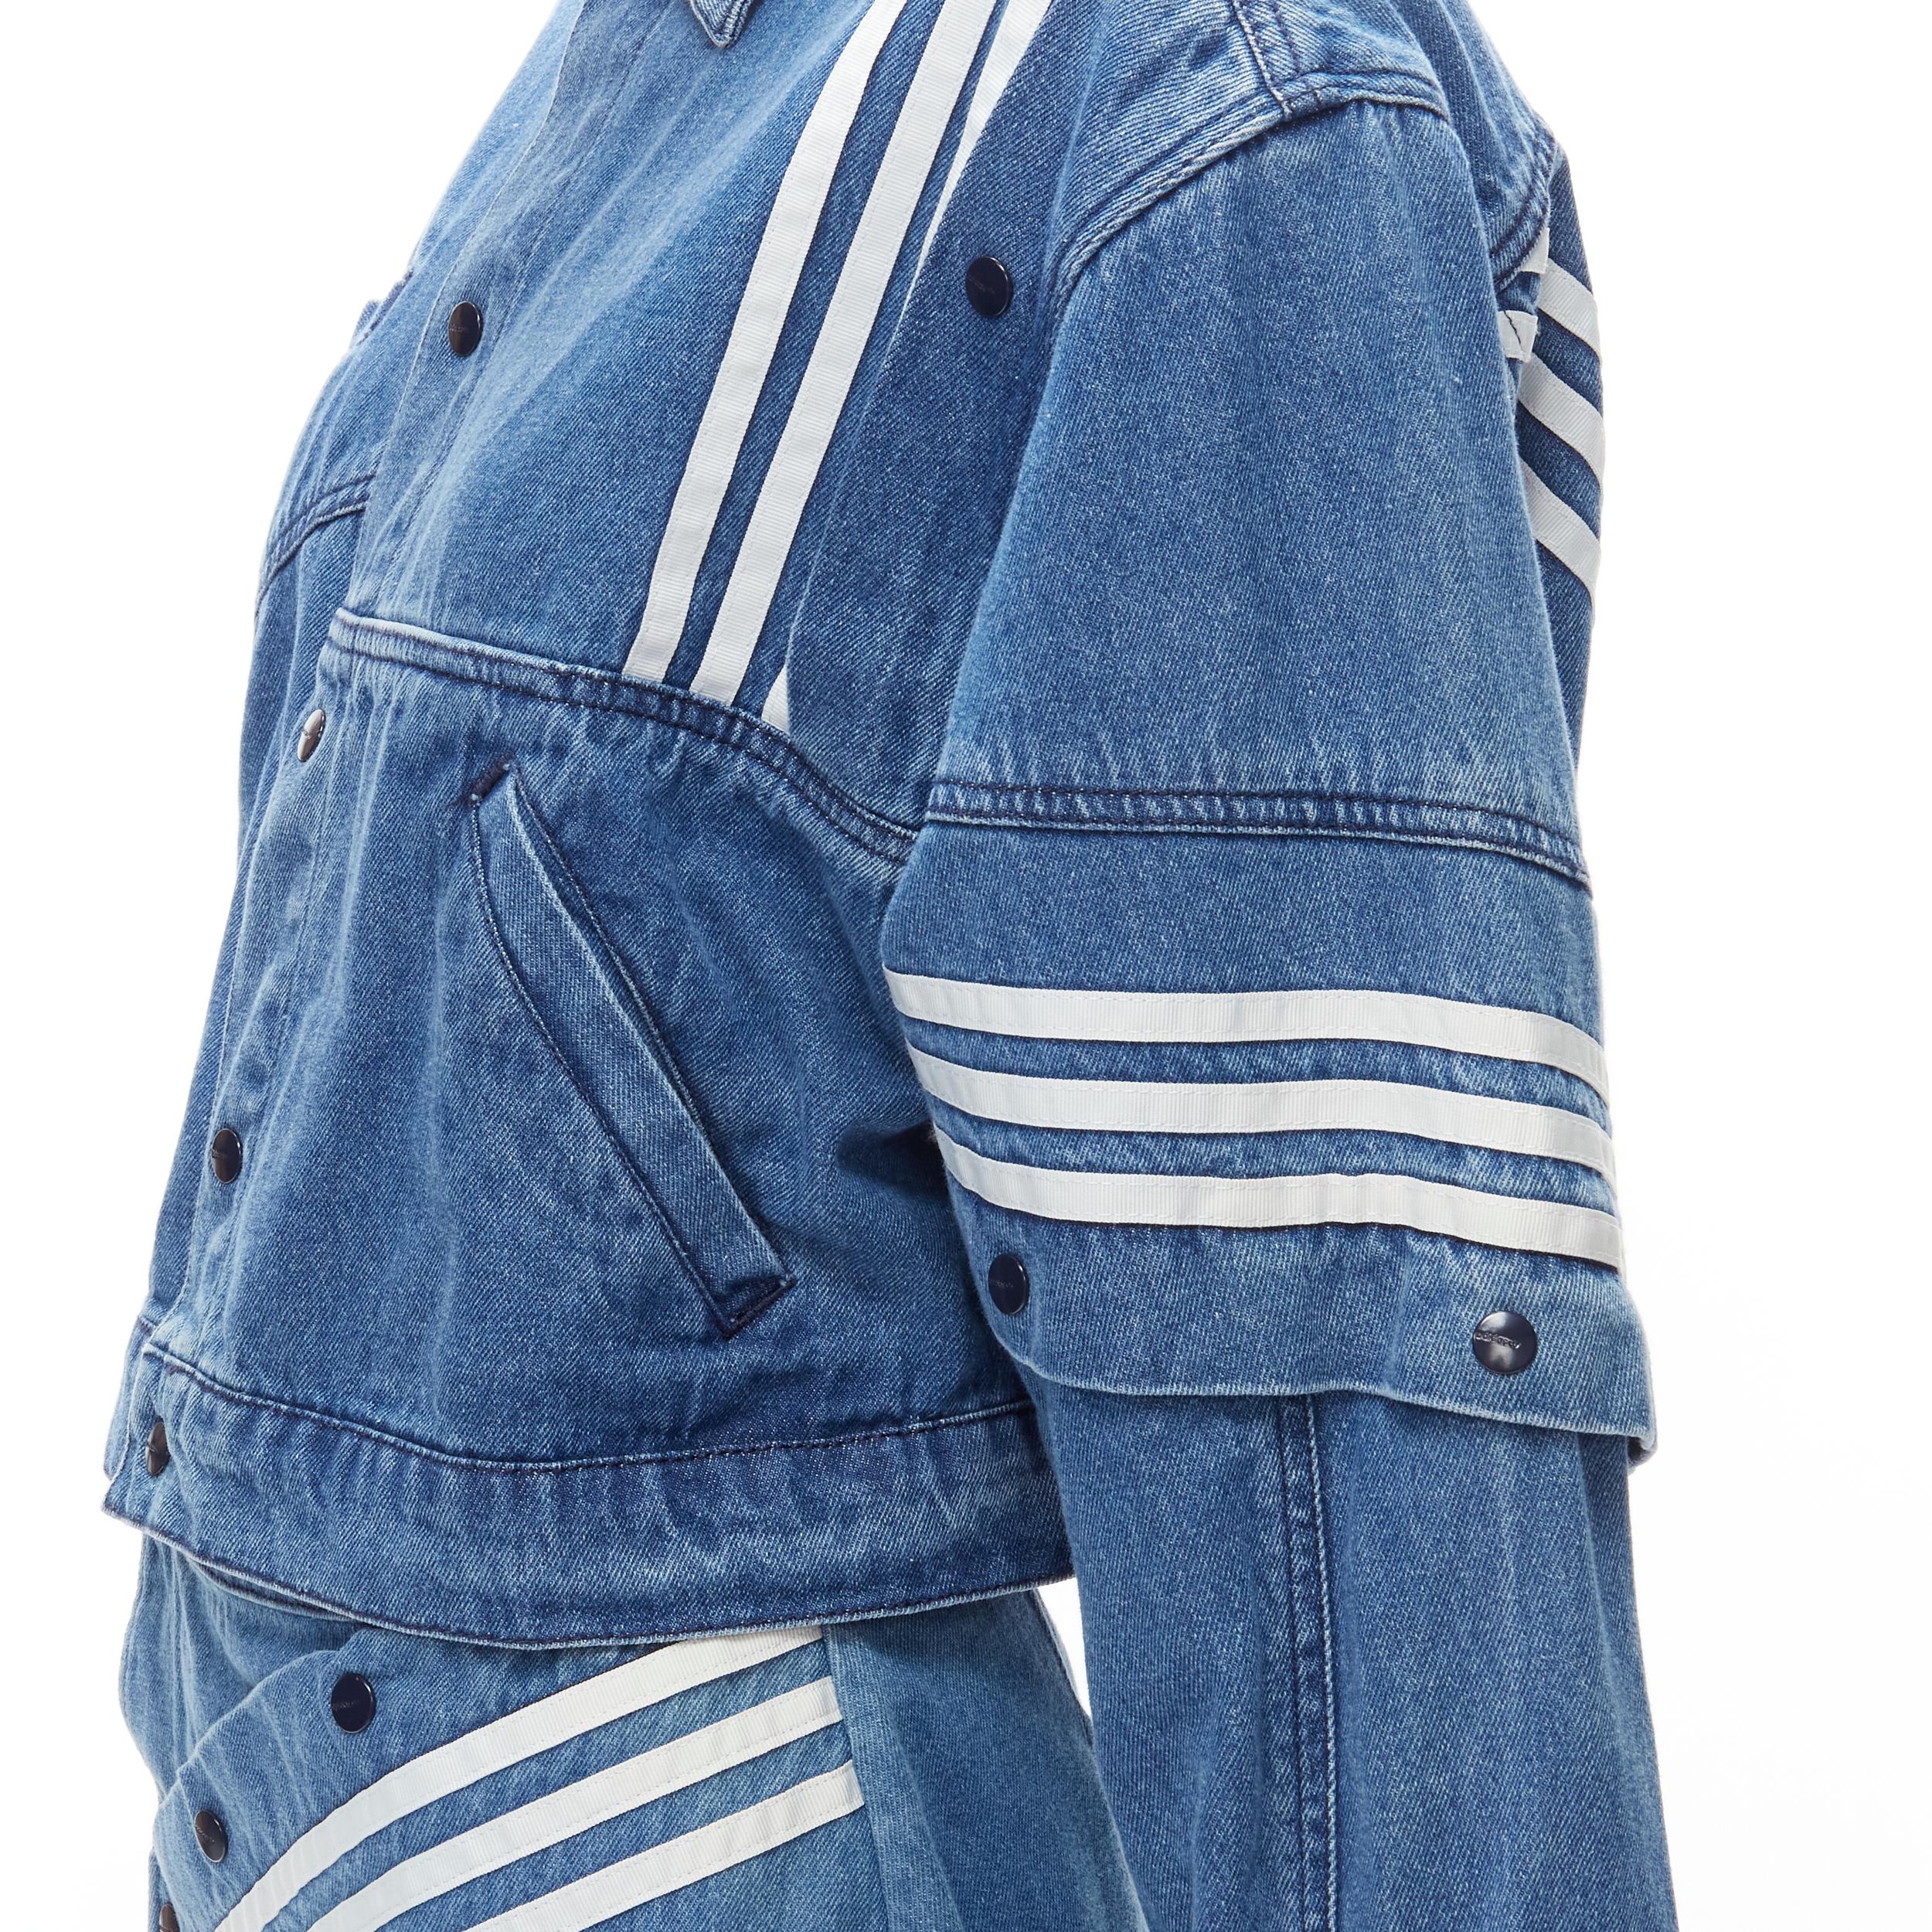 ADIDAS DANIELLE CATHARI blue denim patchwork cropped jacket mini skirt set S 2